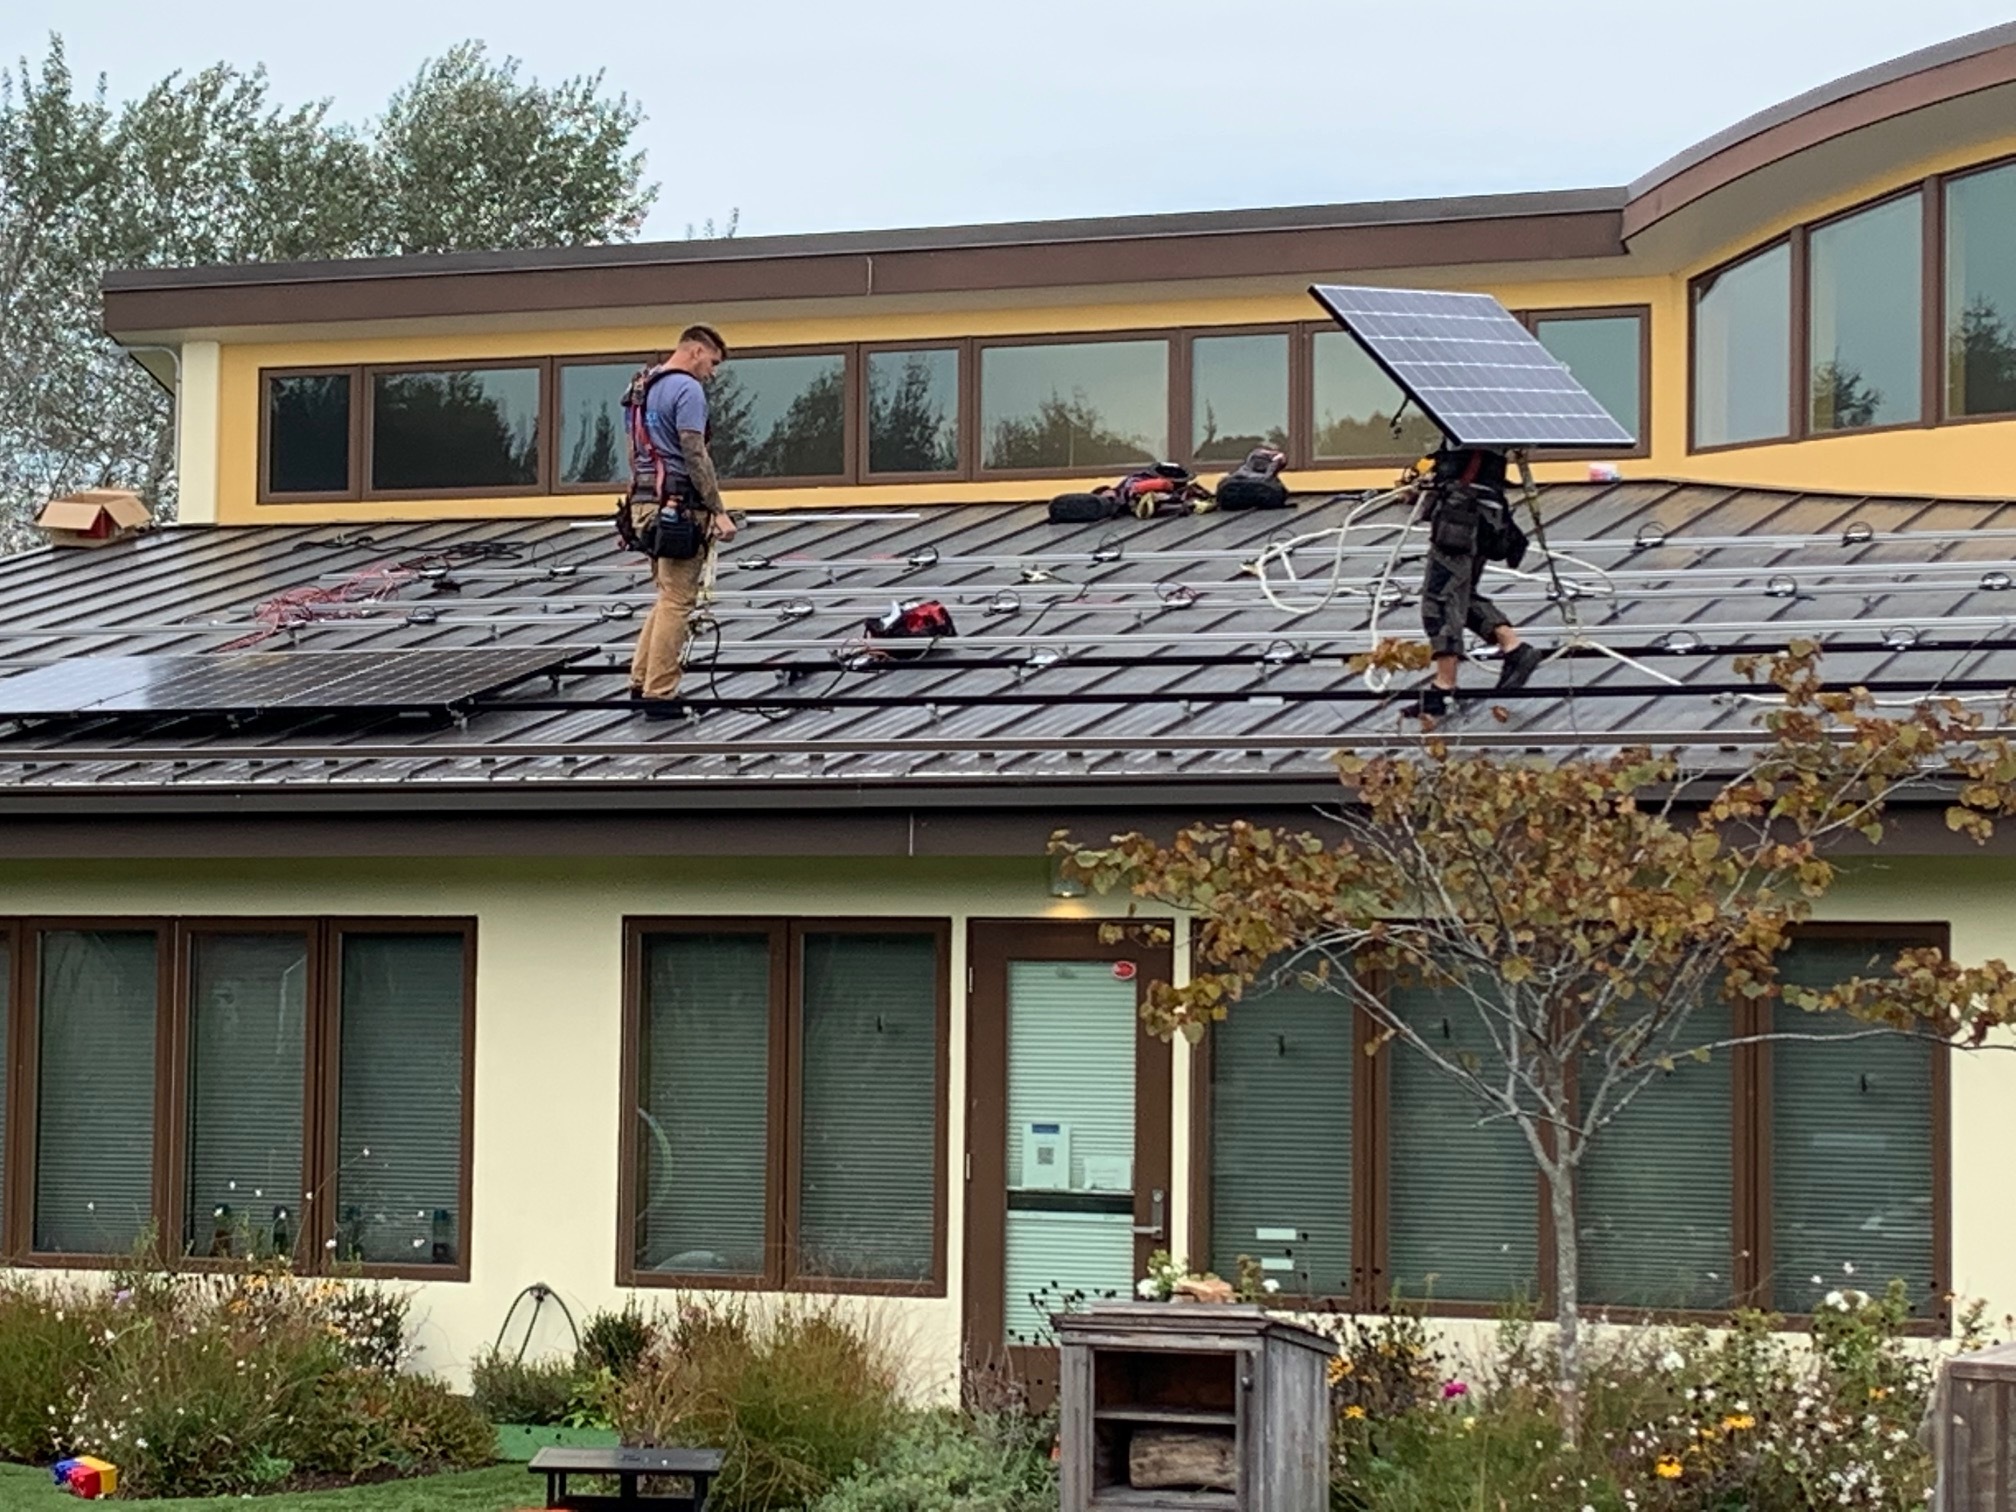 Workers install new solar panels on the roof of the Wuneechanunk Shinnecock Preschool on Monday. STEPHEN J. KOTZ